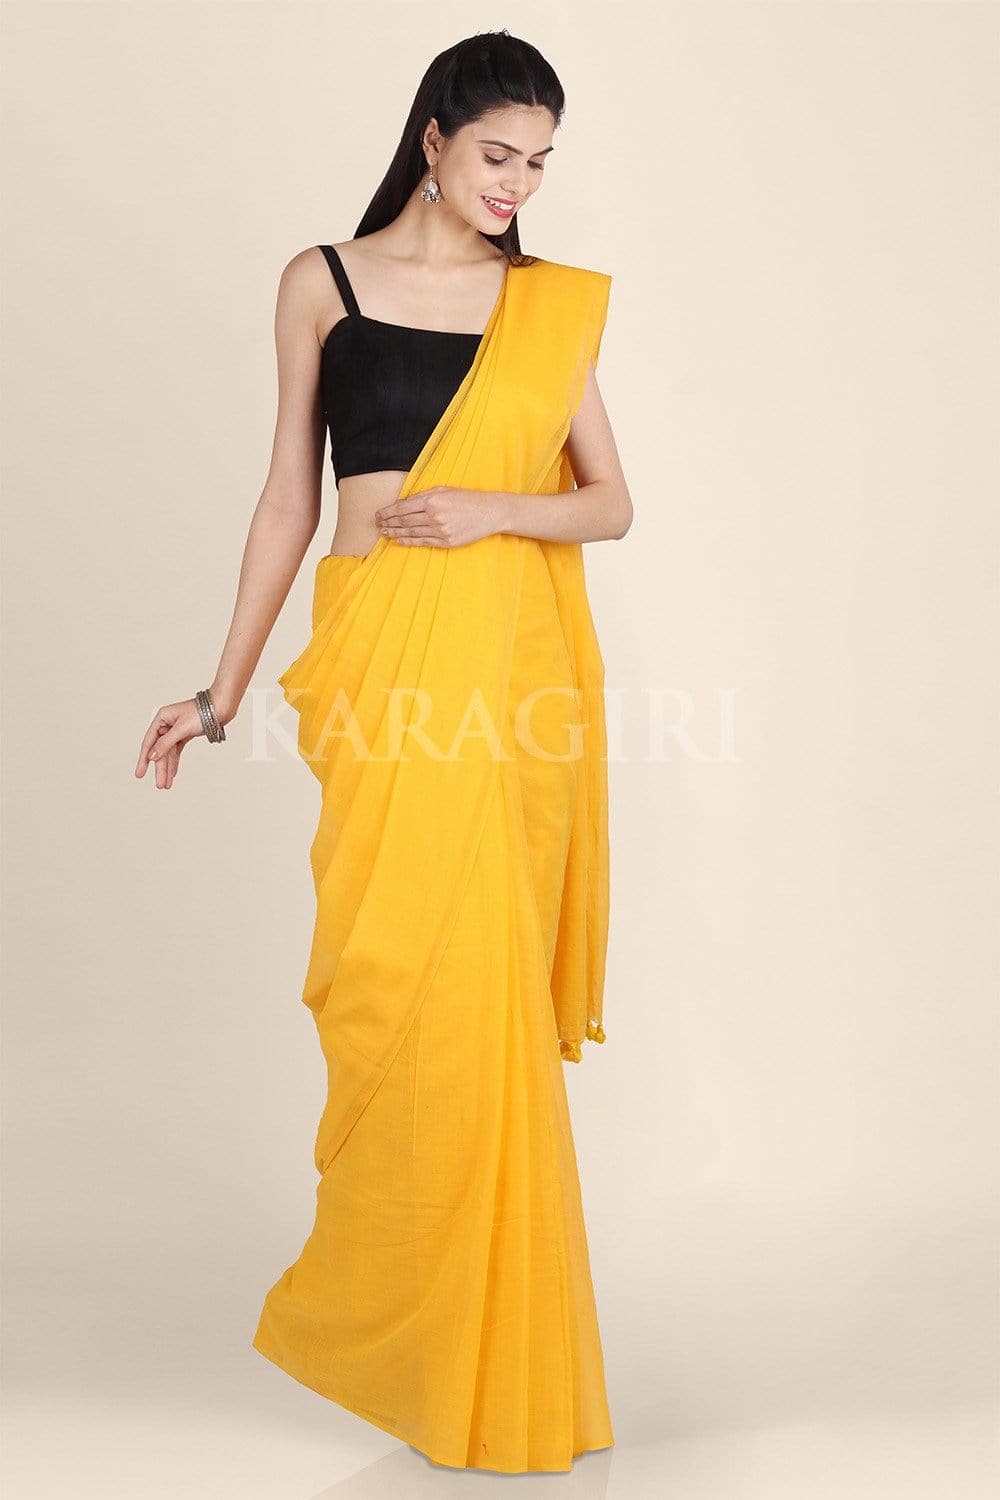 Pure Cotton Dandelion Yellow Handwoven Pure Cotton Saree saree online